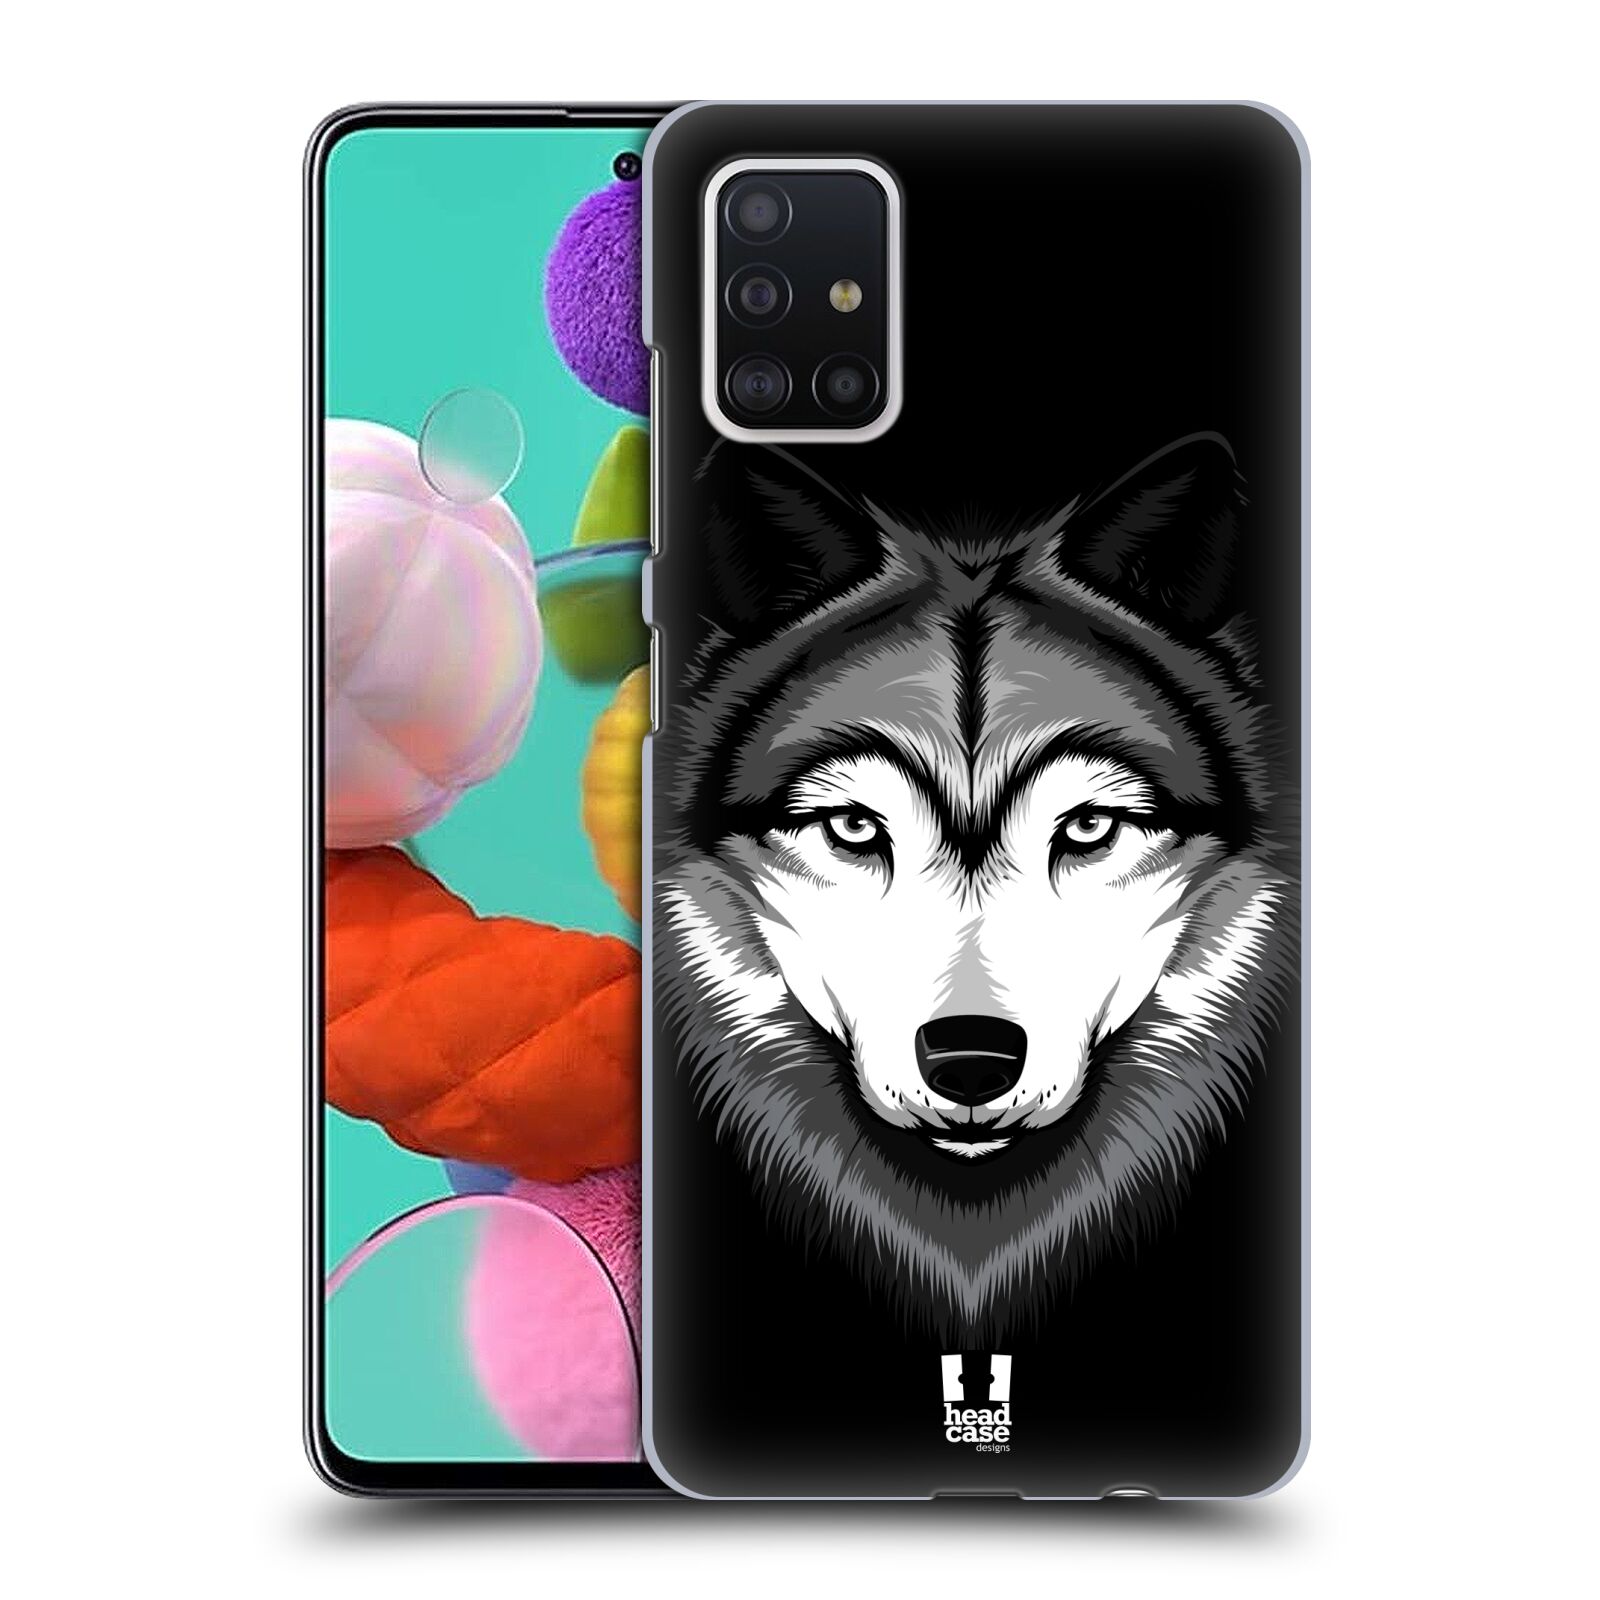 Pouzdro na mobil Samsung Galaxy A51 - HEAD CASE - vzor Zvíře kreslená tvář 2 vlk